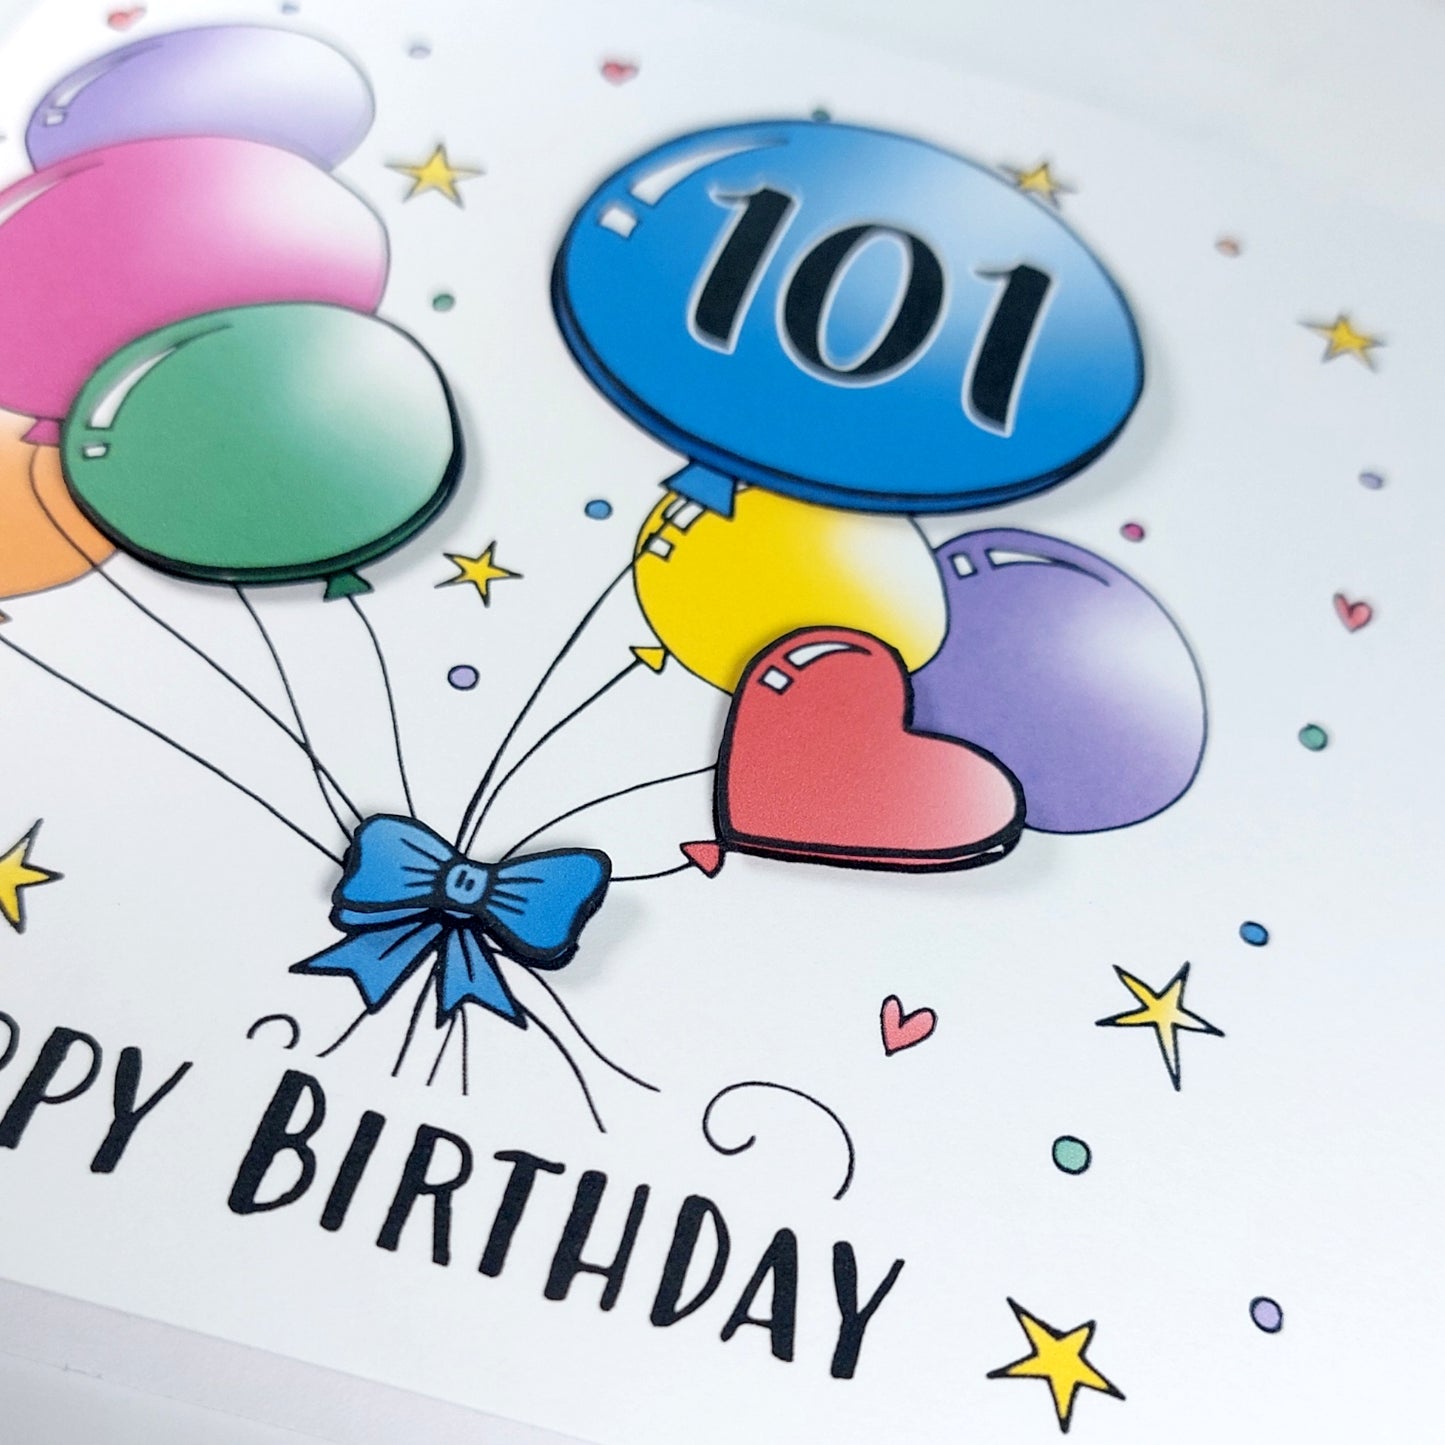 101st Balloons Birthday Card